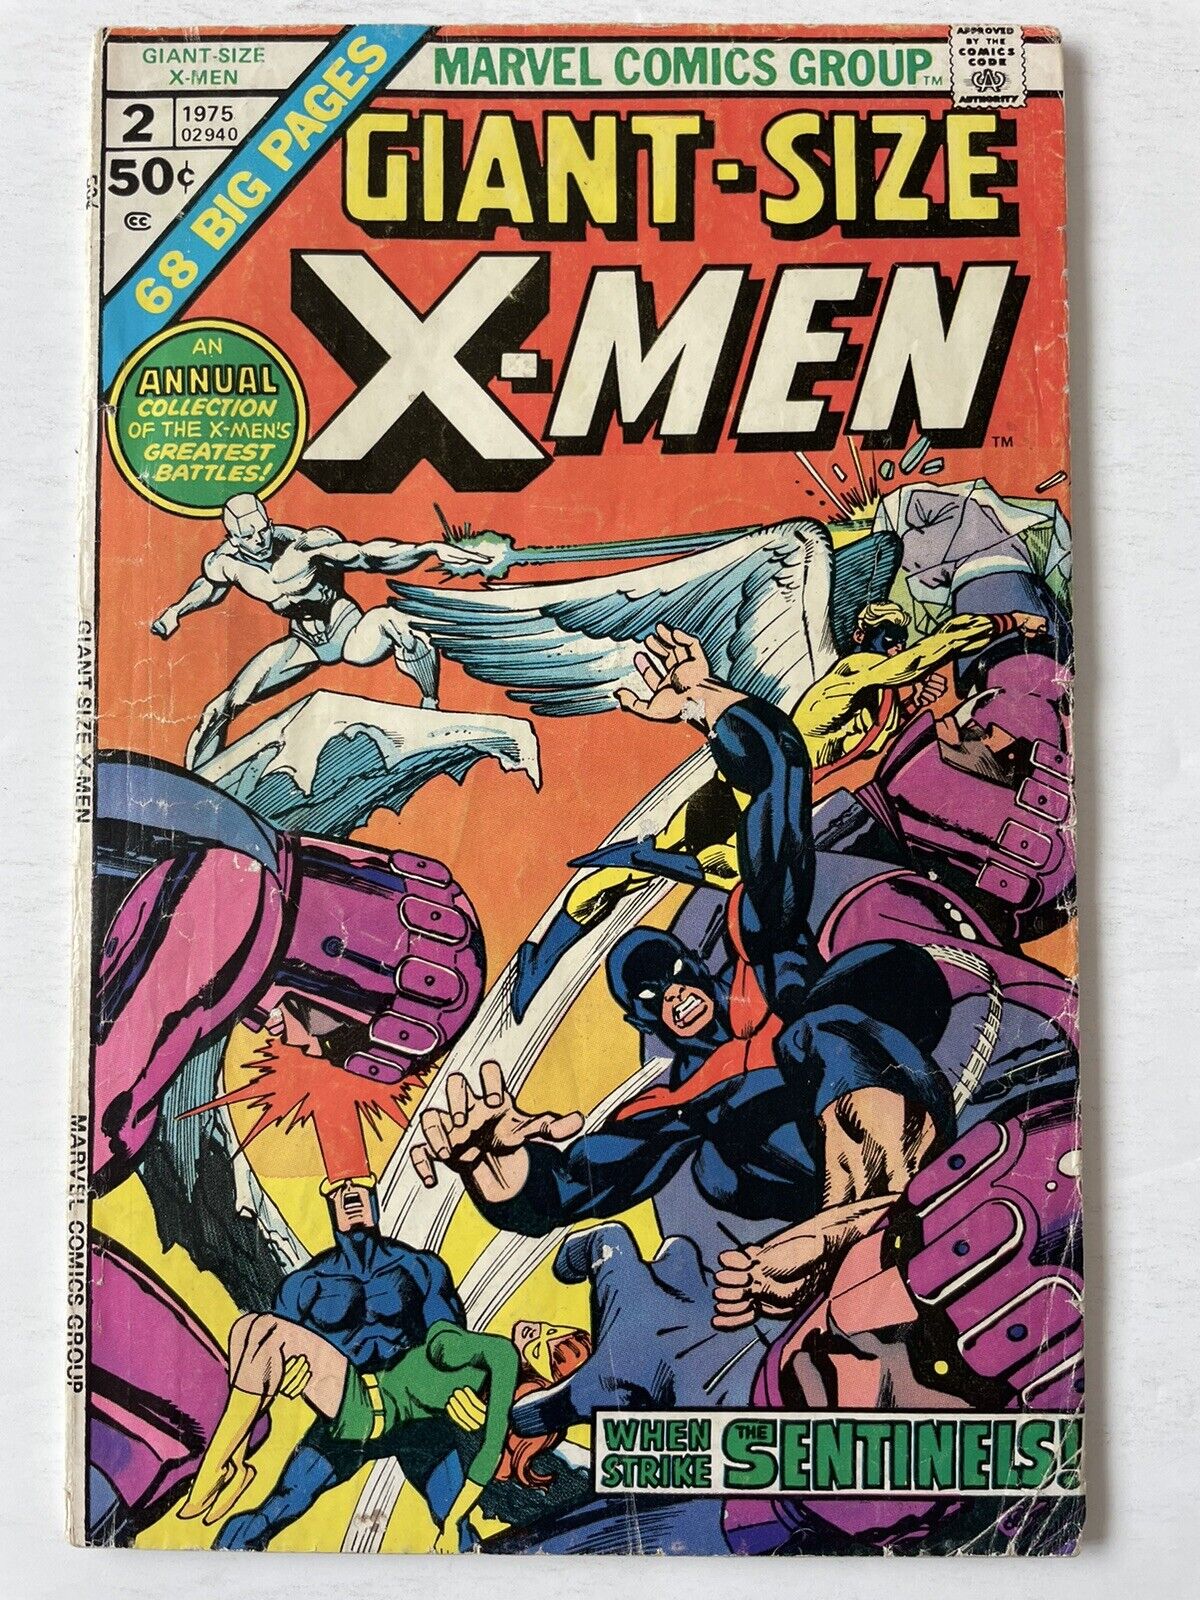 Giant-size X-men #2 1975 Neal Adams, Stan Lee FINE - condition 🔥 GEMINI 🔥